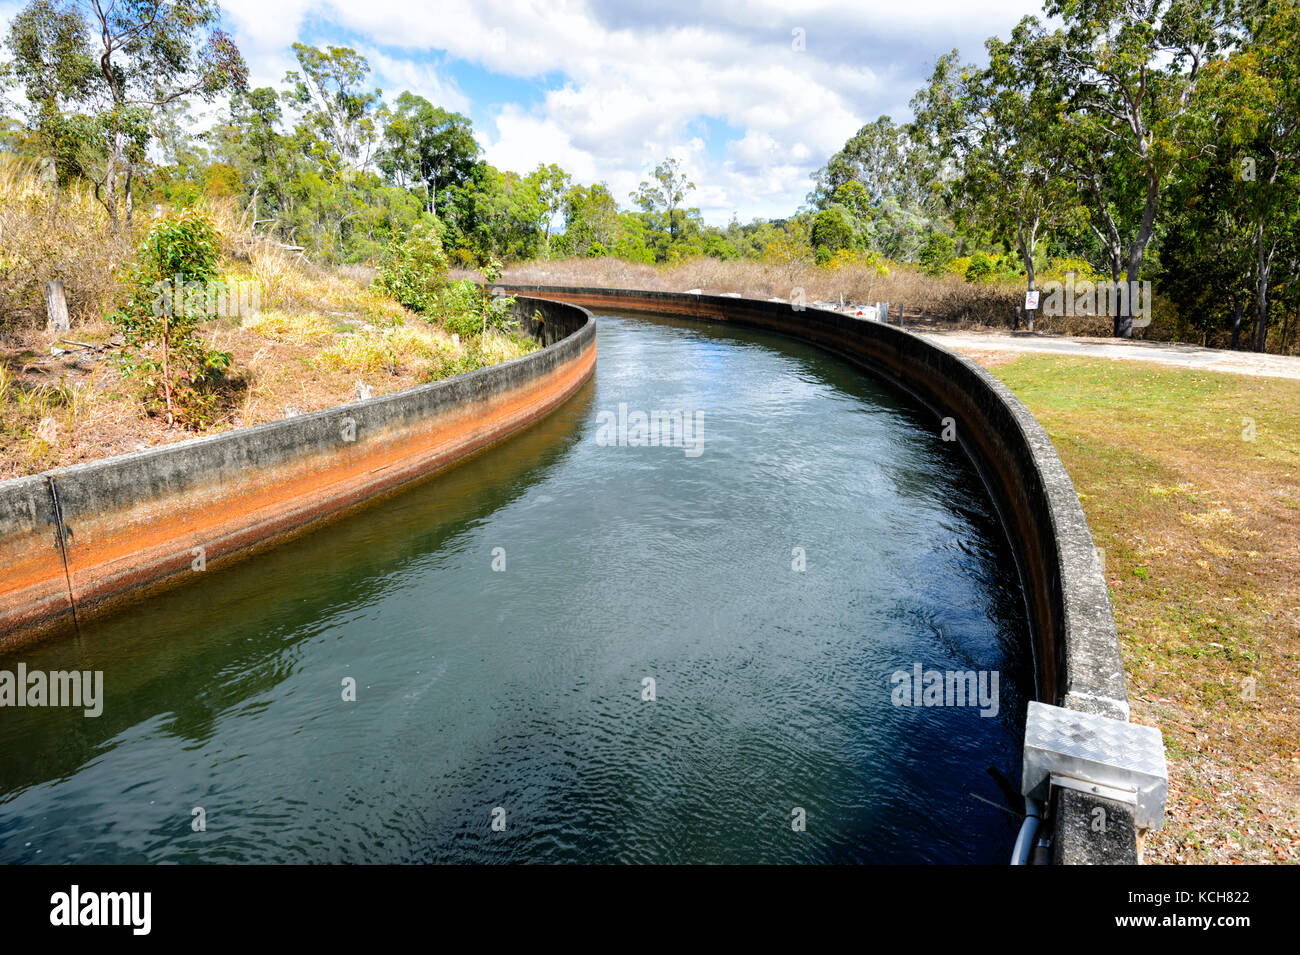 Irrigation canal from the Tinaroo Falls Dam across the Barron River, Atherton Tablelands, Far North Queensland, Australia Stock Photo